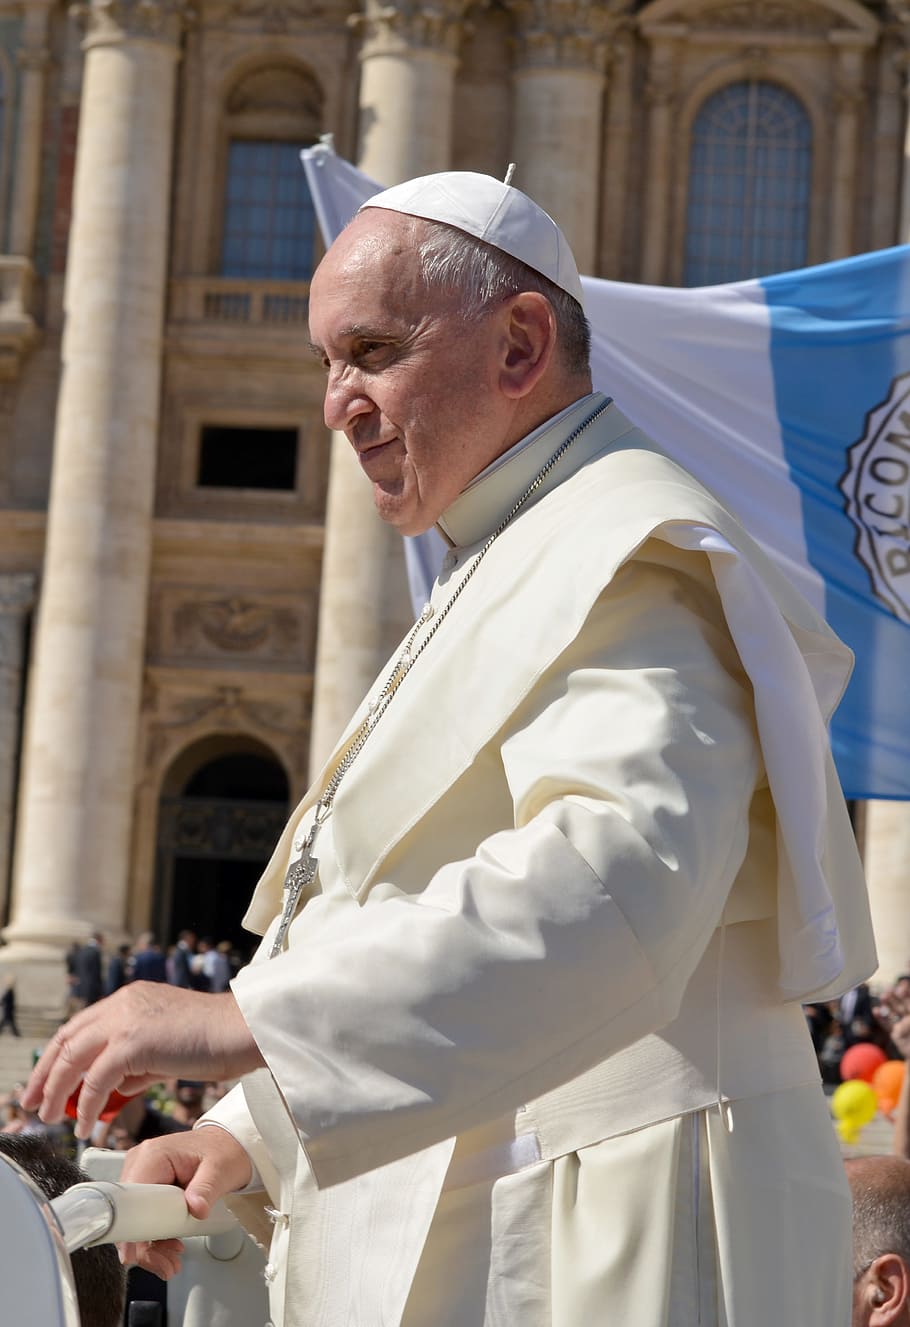 HD wallpaper: Pope Francis standing near flag, pontiff, catholic